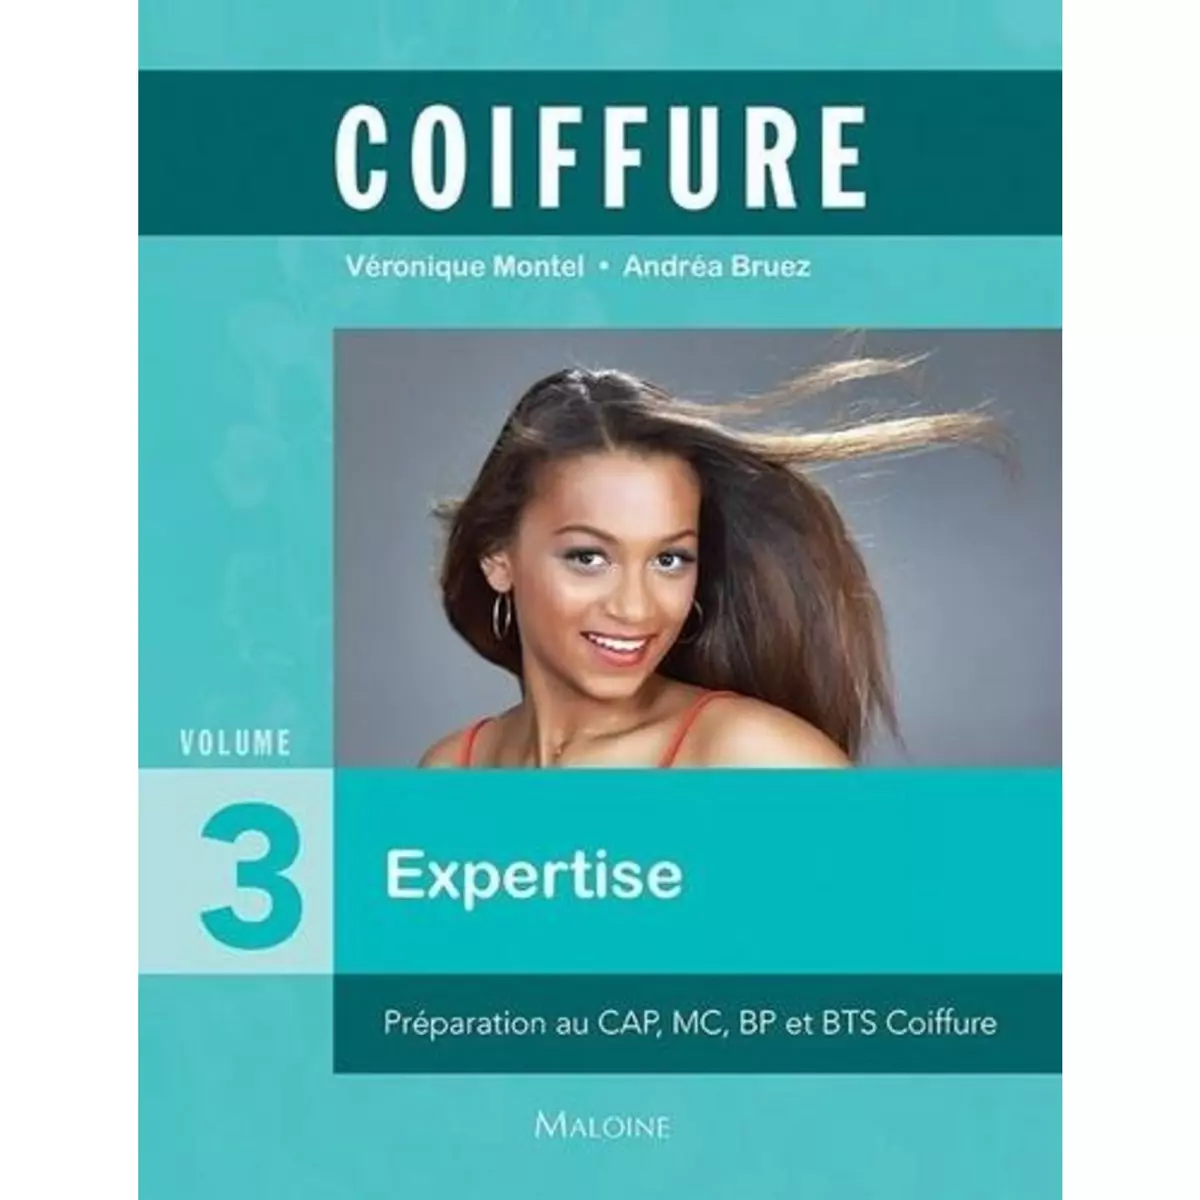  COIFFURE. TOME 3, EXPERTISE, Montel Véronique